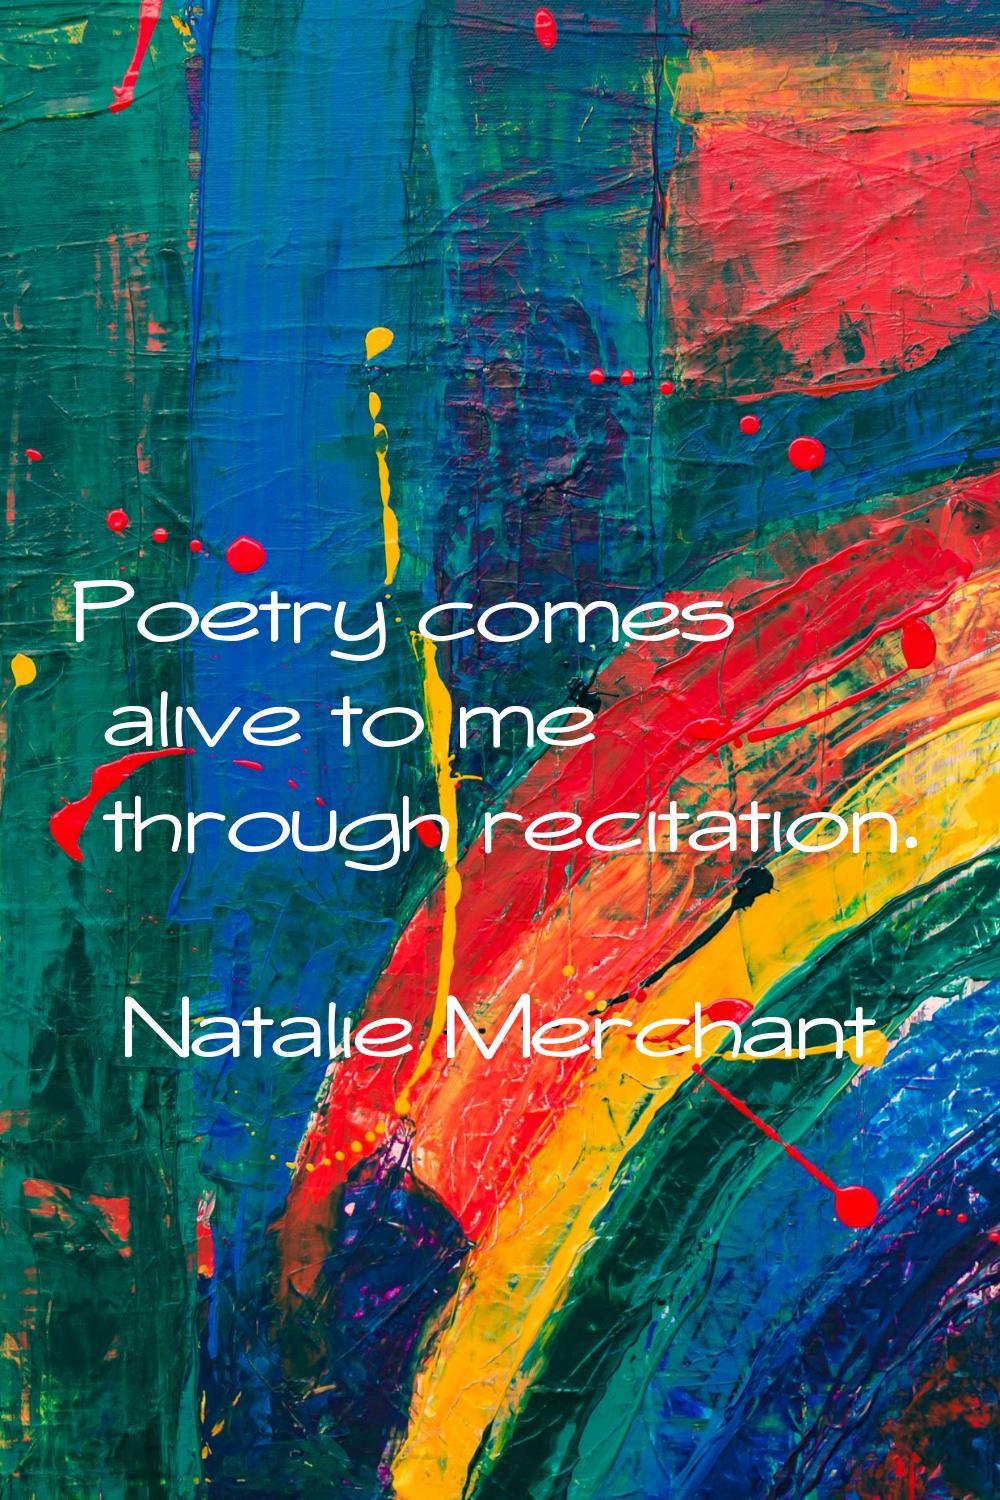 Poetry comes alive to me through recitation.